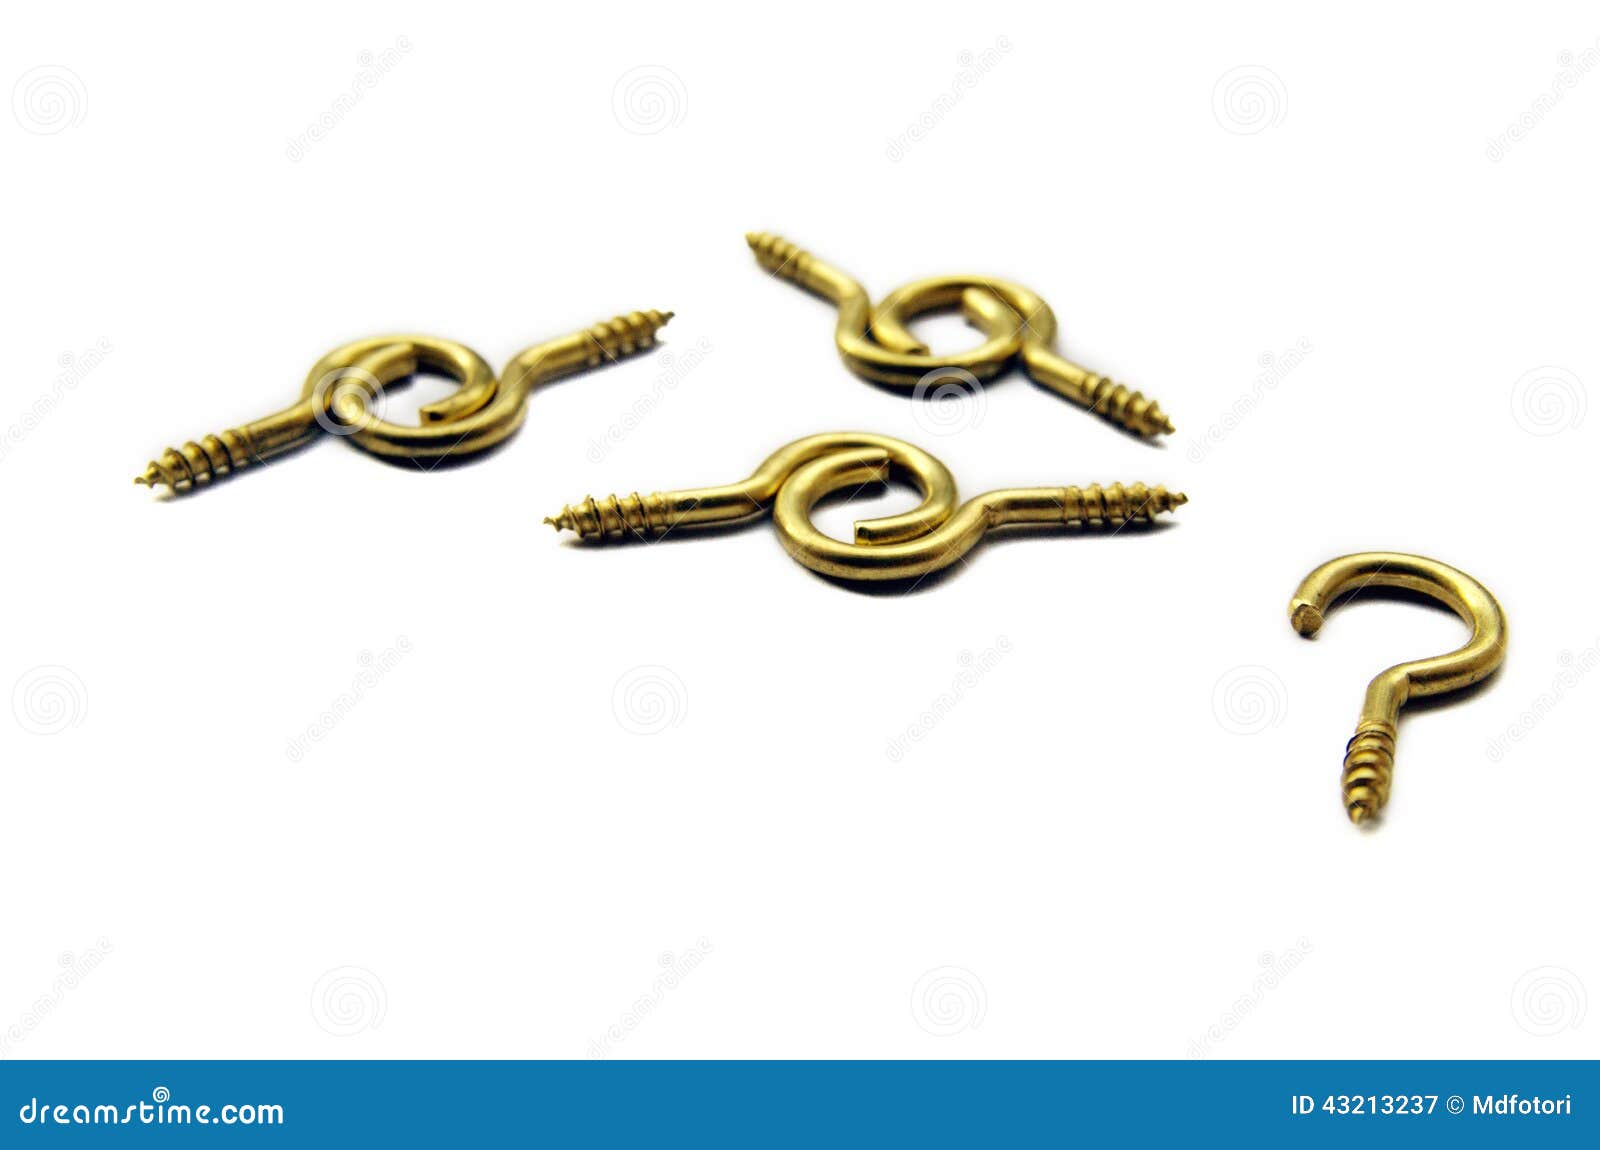 golden wall hooks asorted